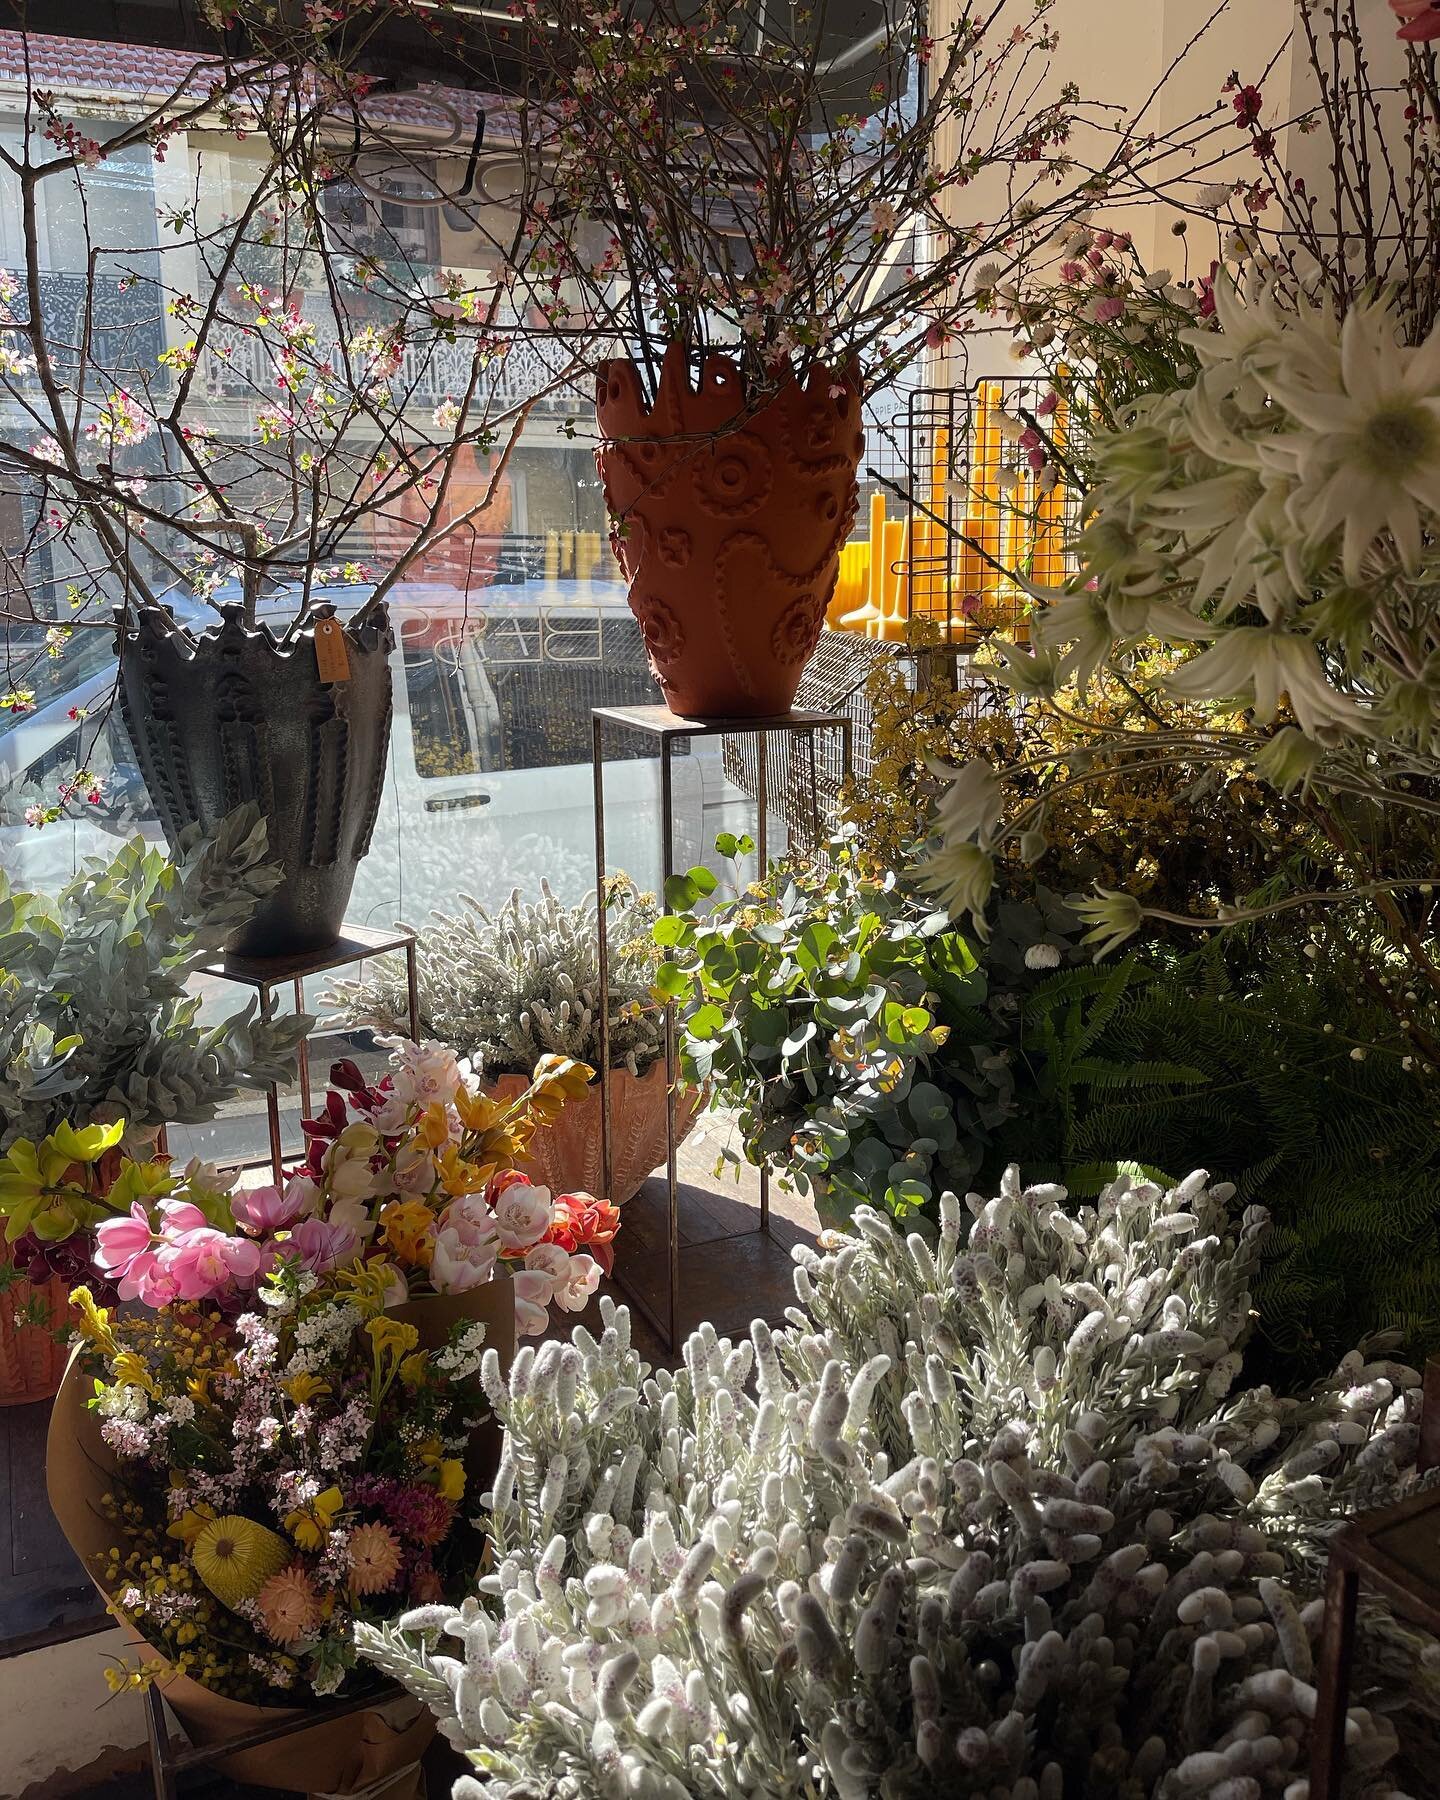 Spring!

#besspaddington 
#williamstreetpaddington 
#australianflora 
#flannelflowers